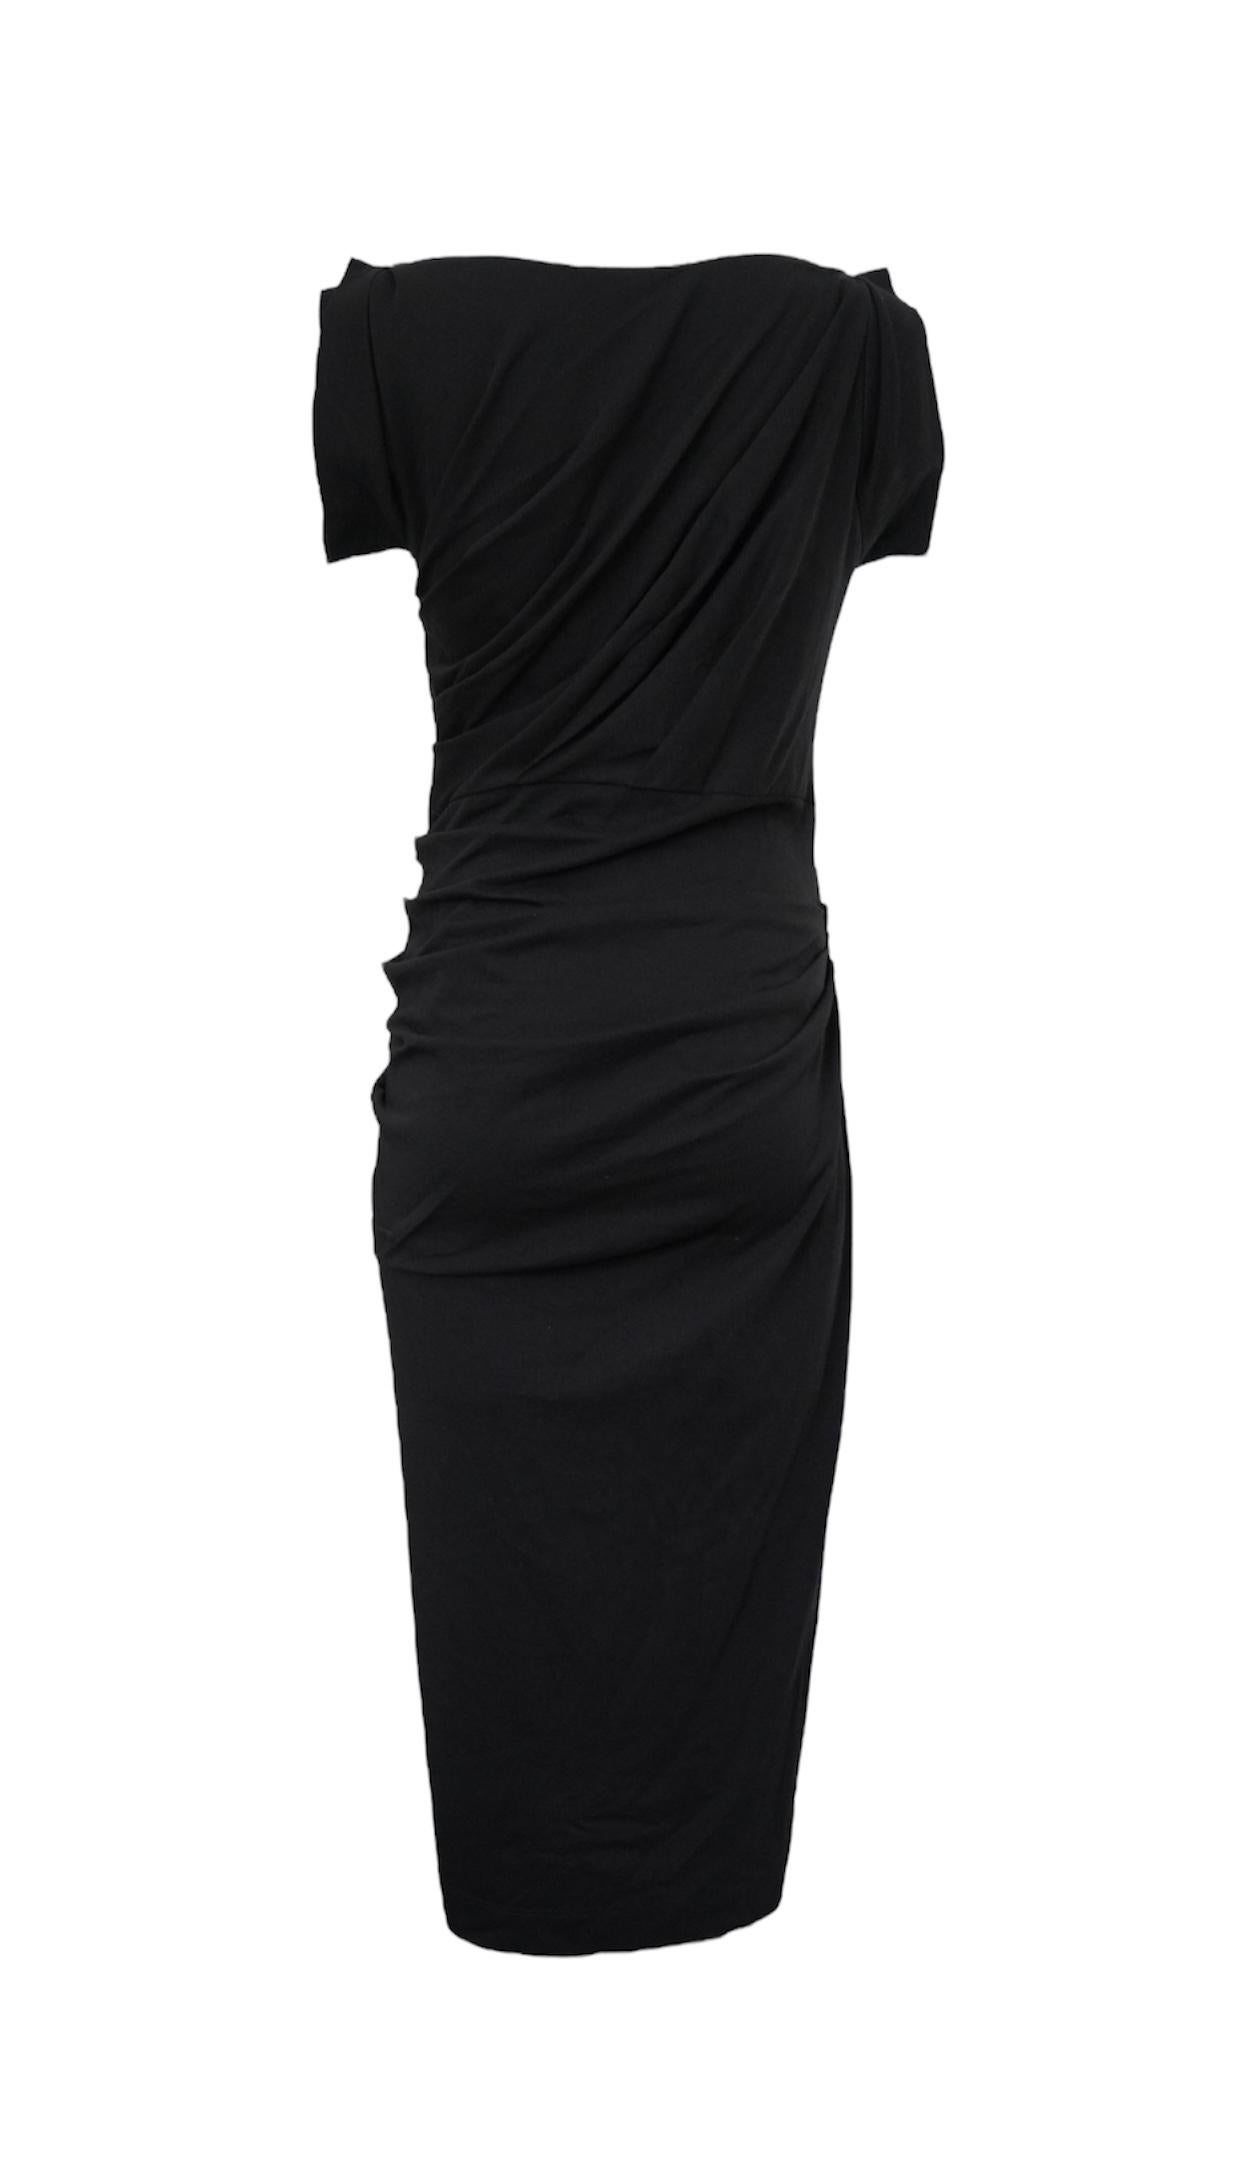 Dries Van Noten Black Midi Deep V Dress In Good Condition For Sale In Beverly Hills, CA